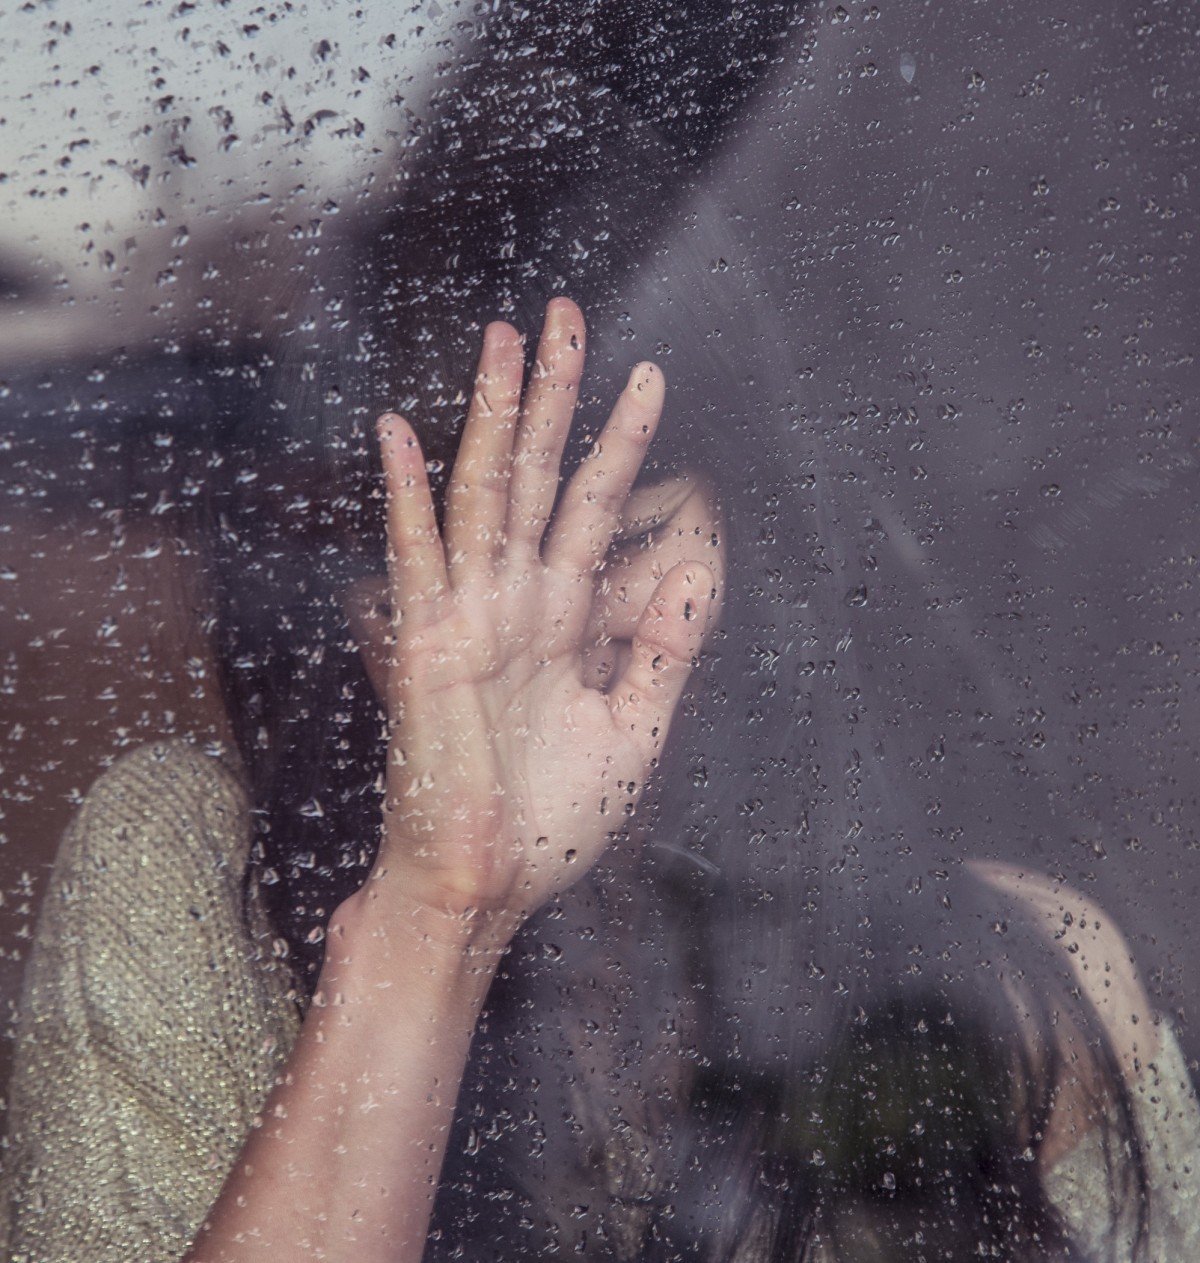 Mujer llorando contra ventana en día lluvioso. | Imagen: PxHere